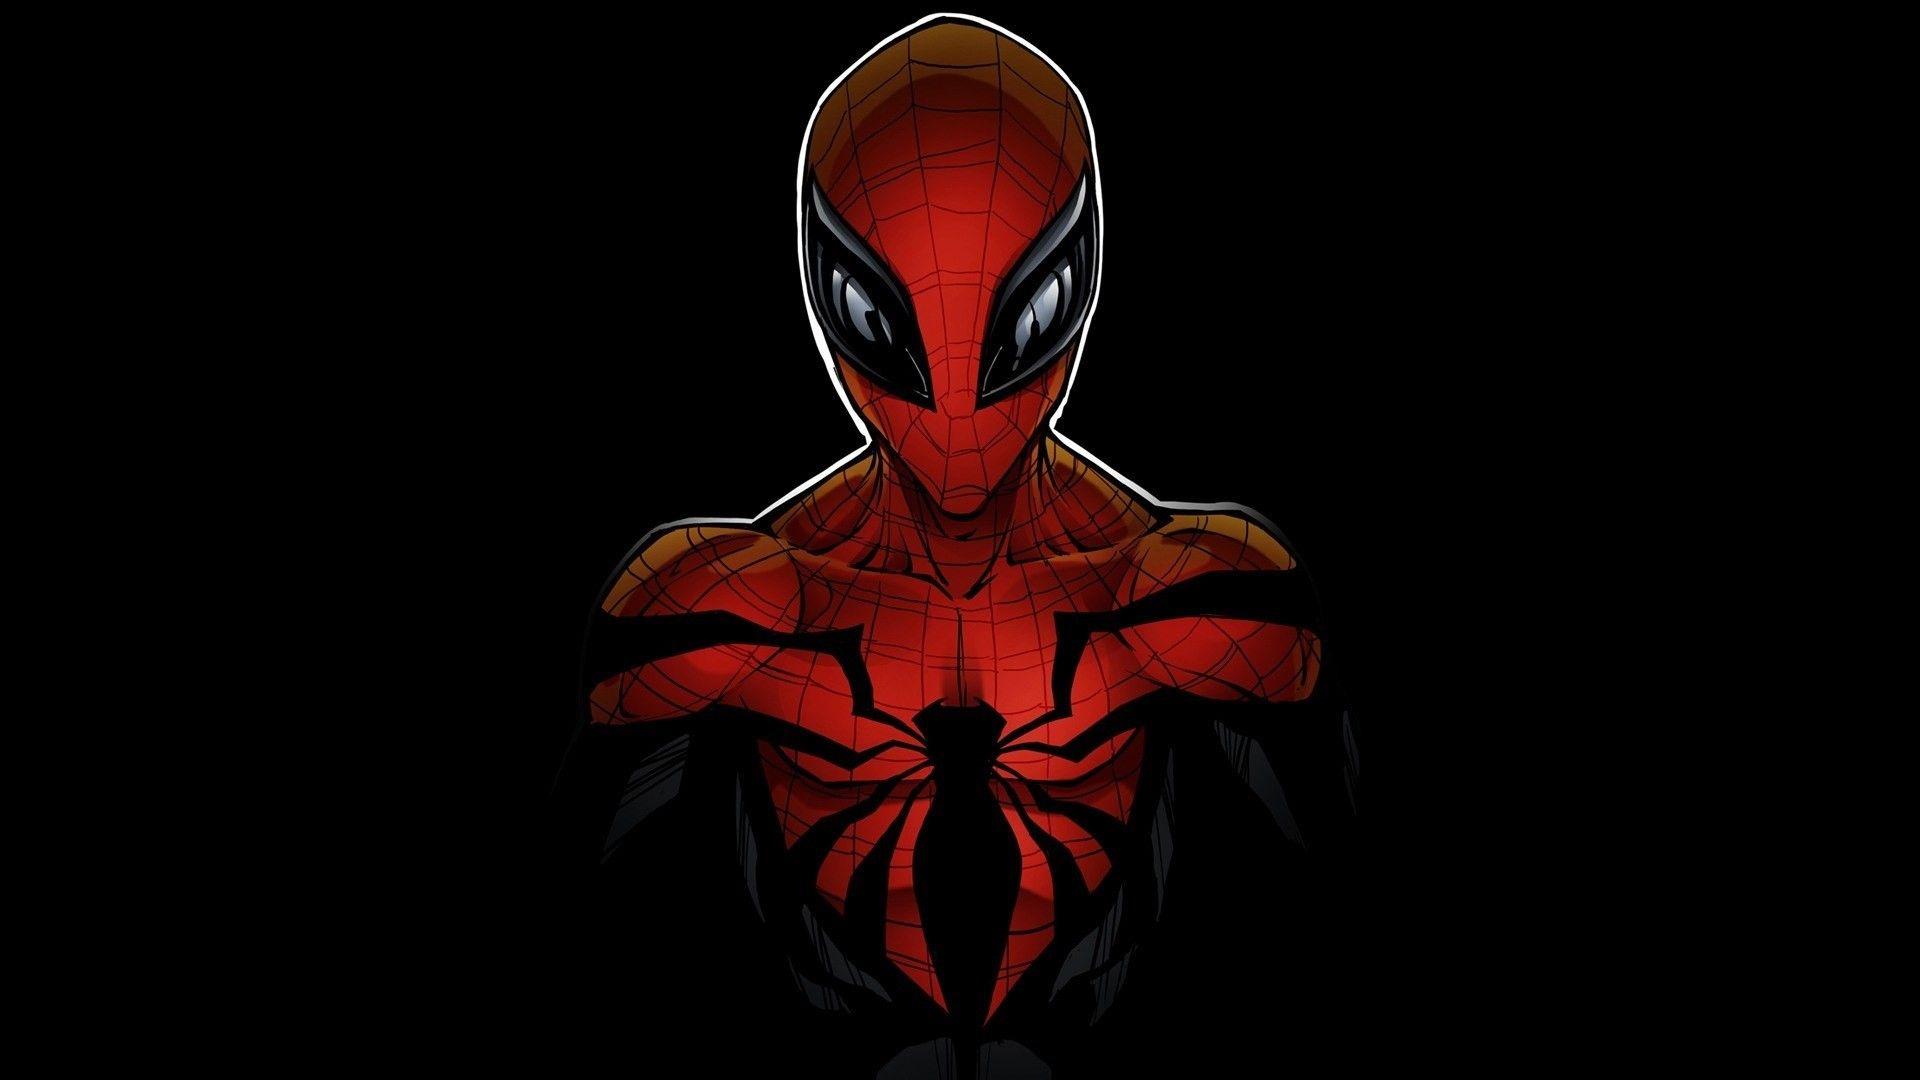 SpiderMan PS Black Suit wallpaper in 360x720 resolution